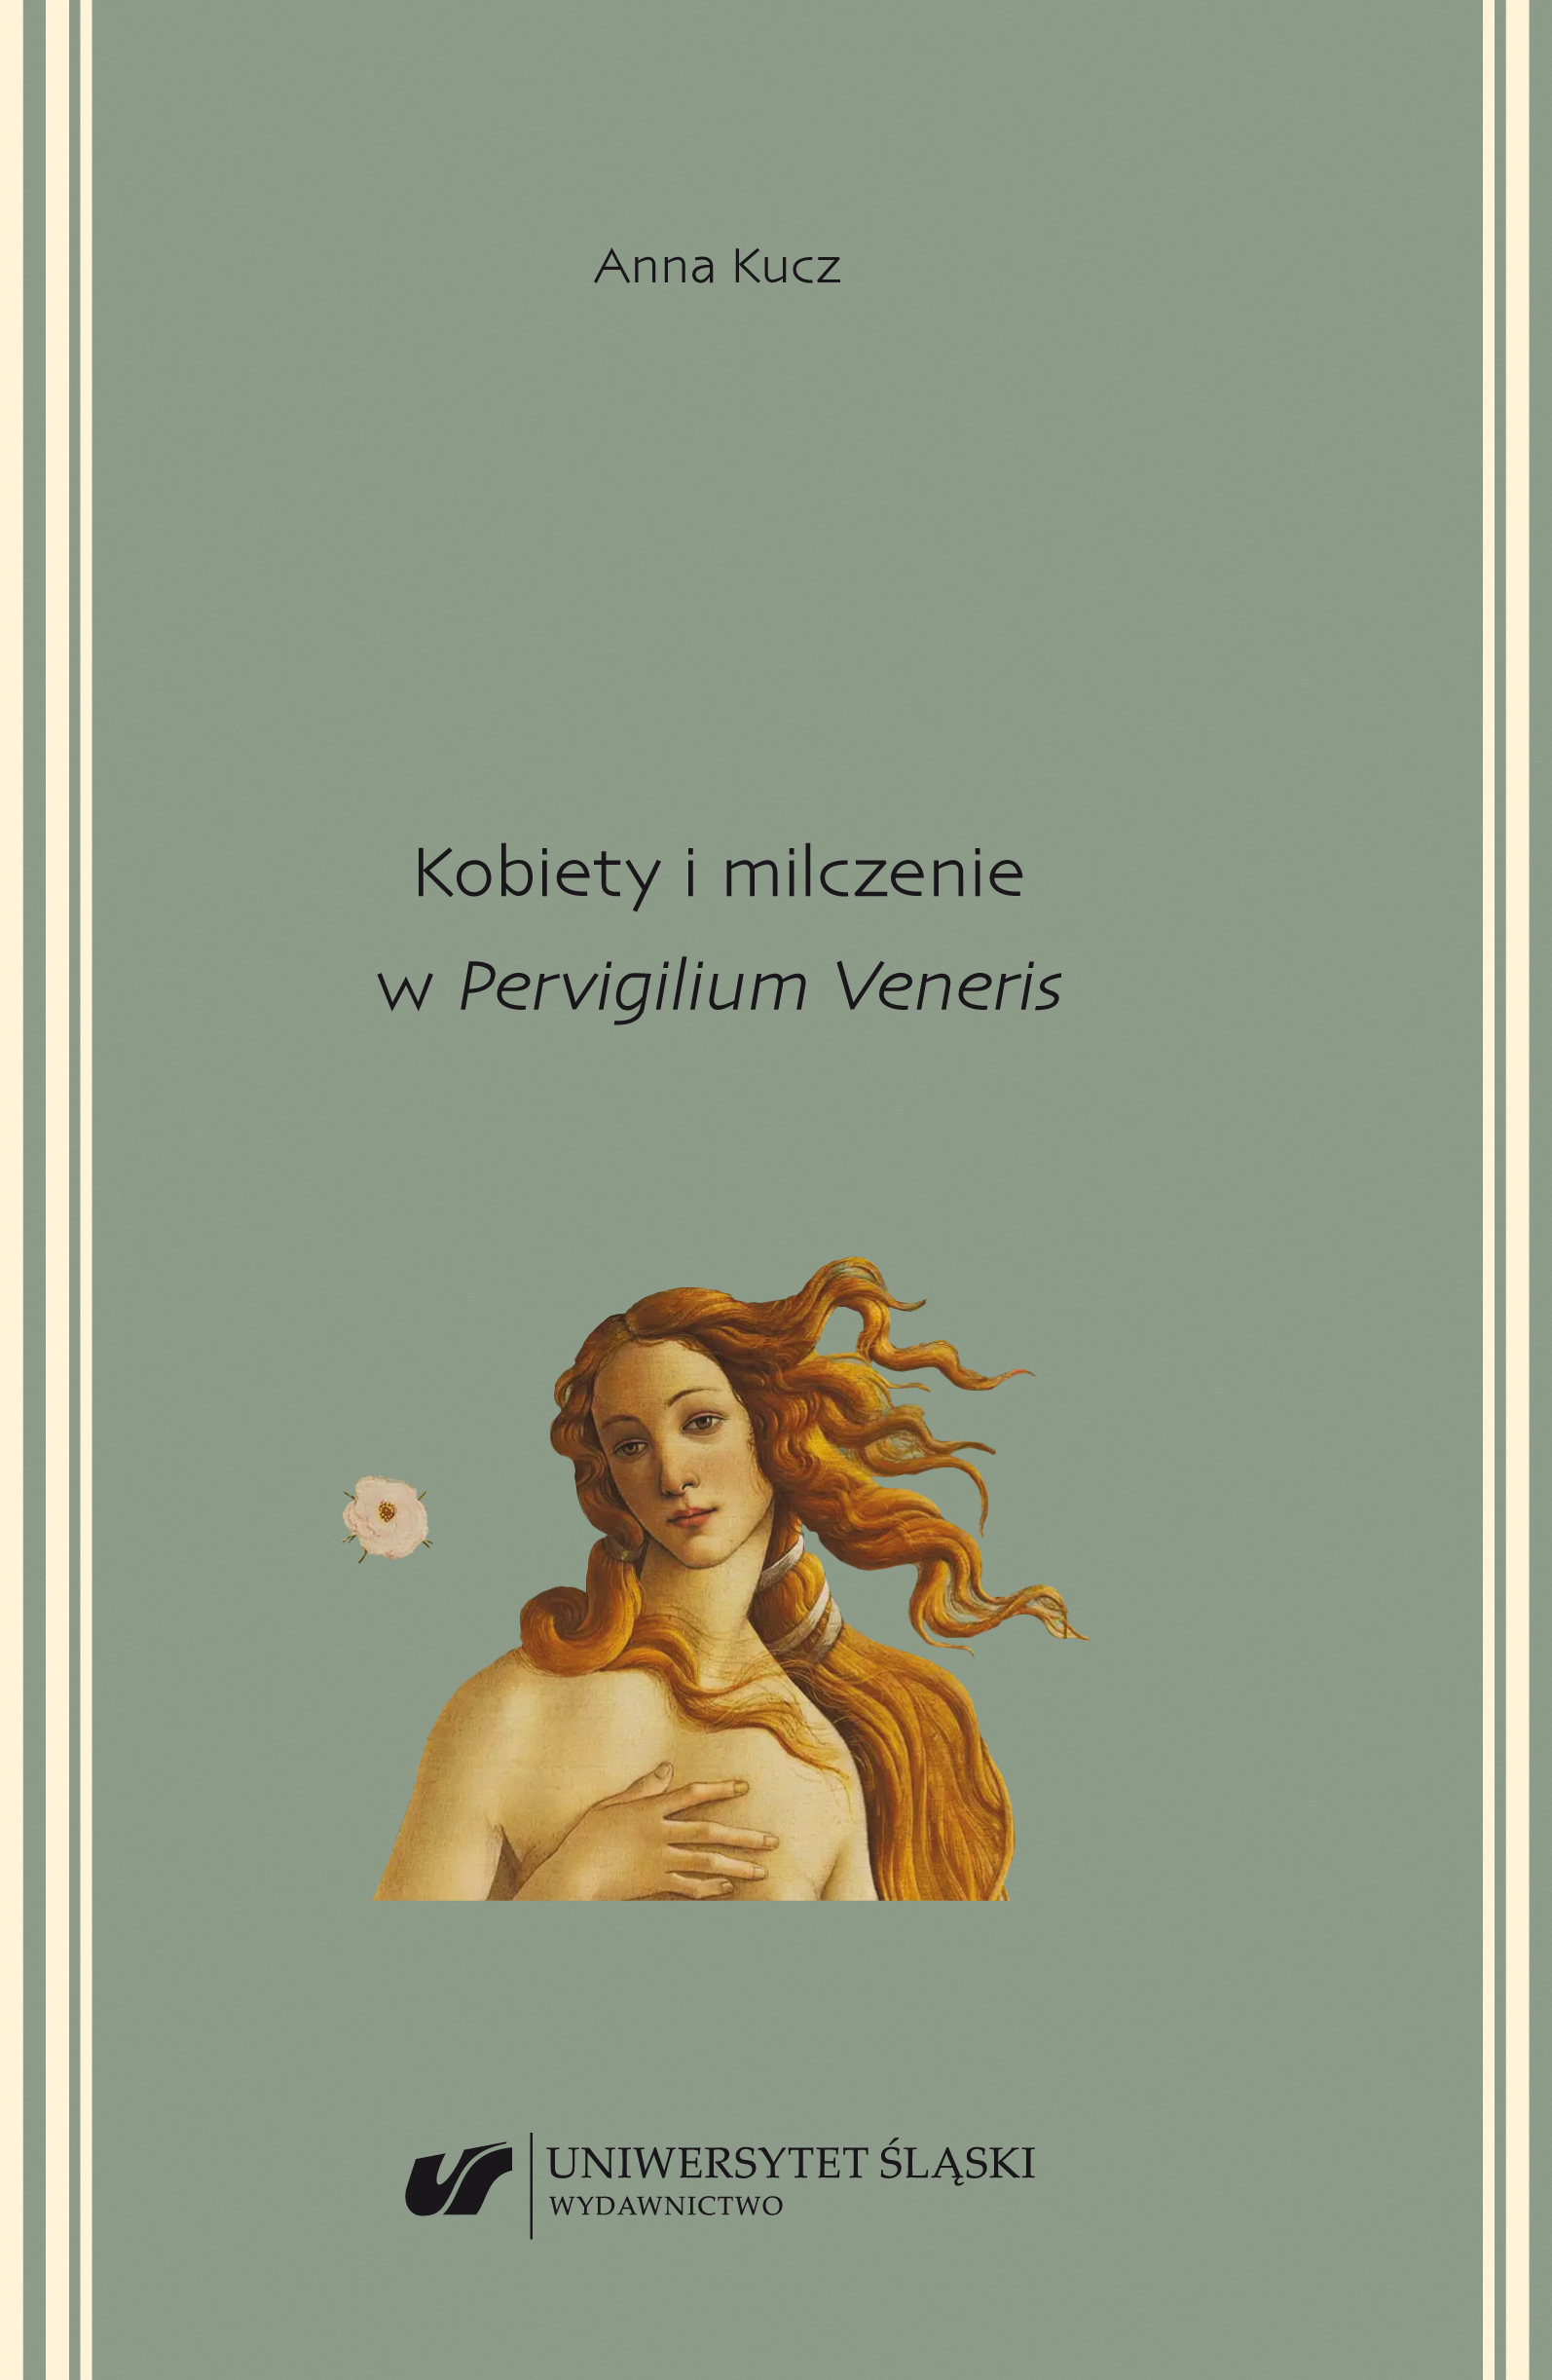 Women and silence in "Pervigilium Veneris"